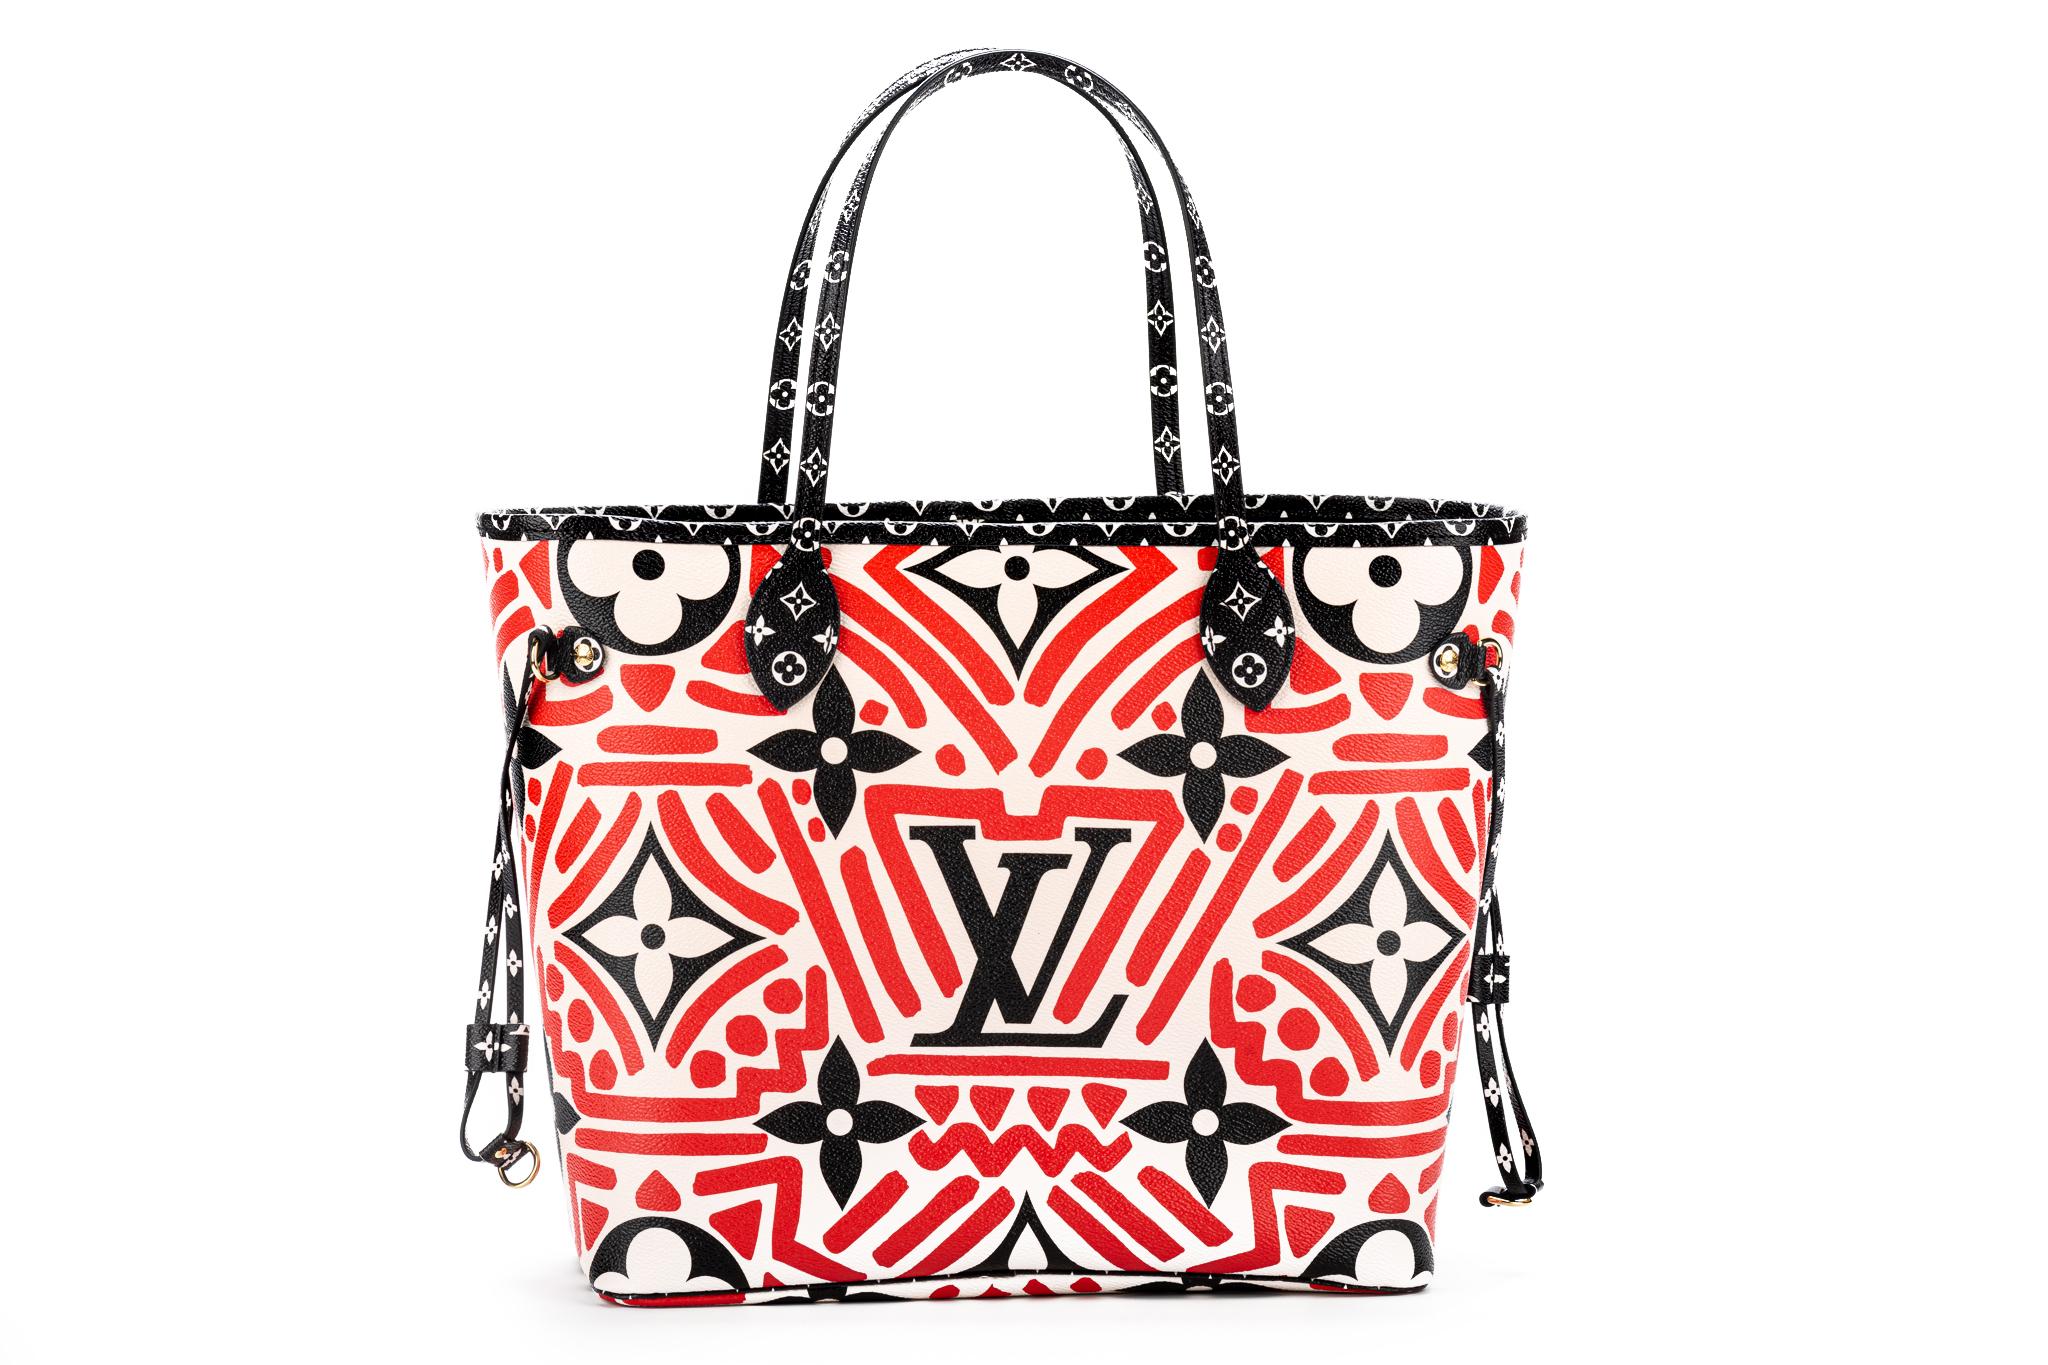 Beige New in Box Louis Vuitton 2020 Neverfull Red Black Geometric Bag